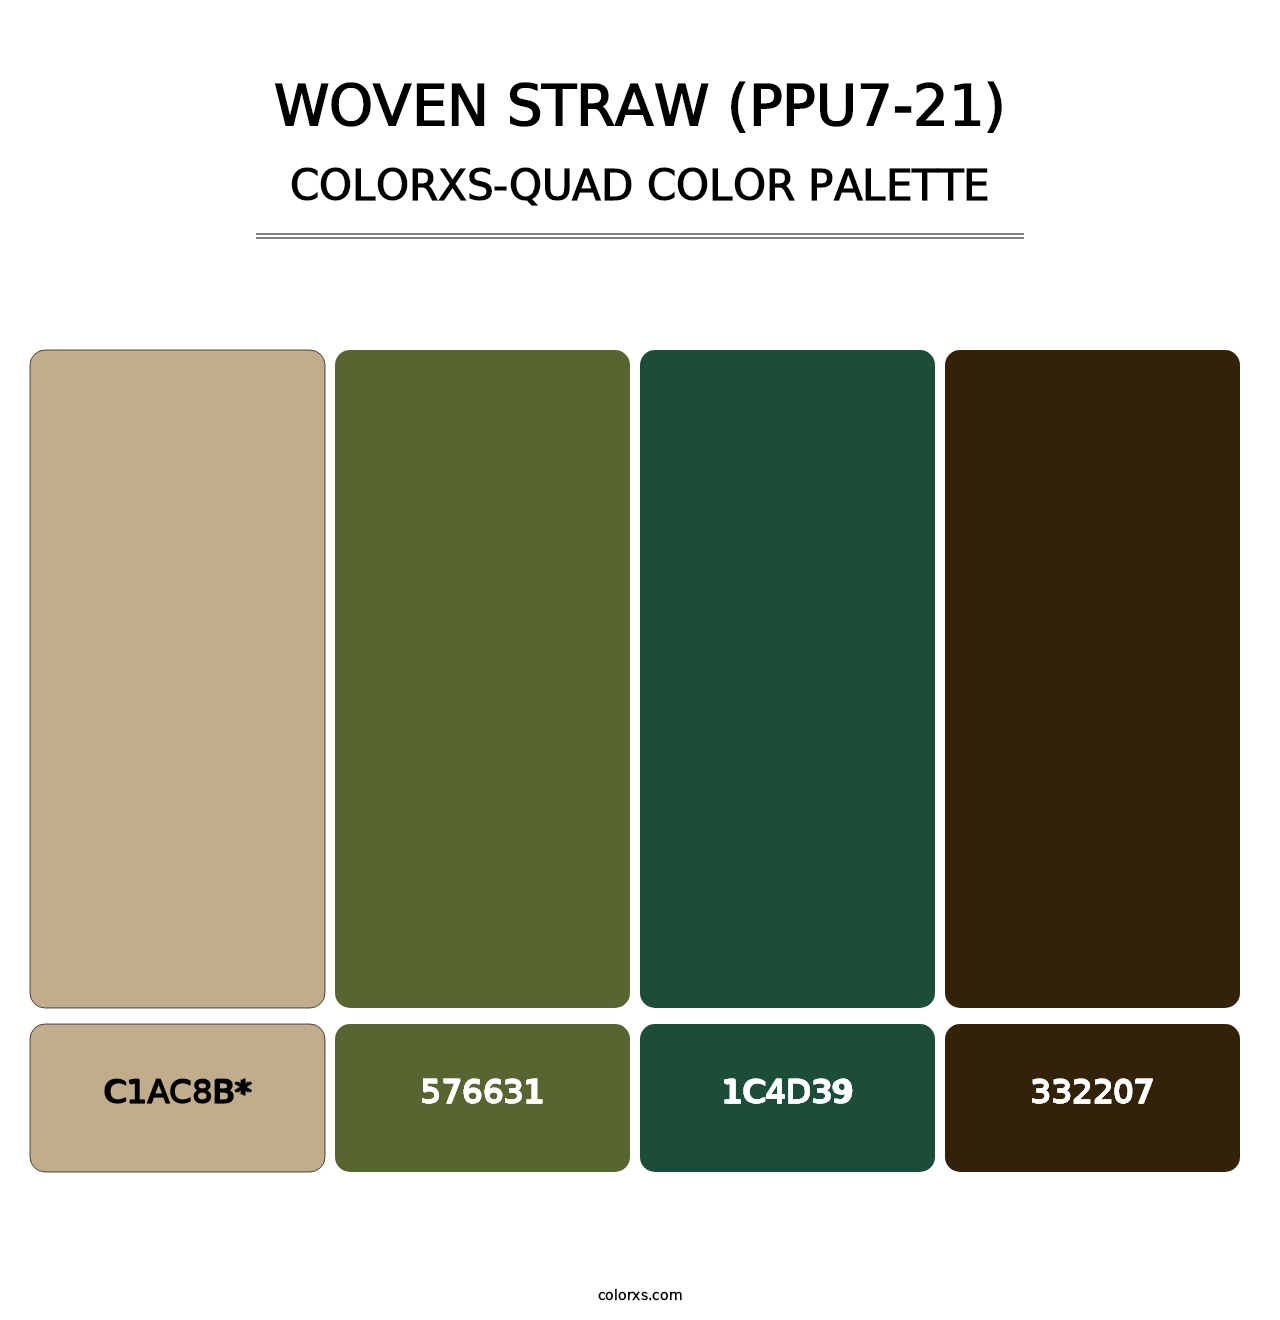 Woven Straw (PPU7-21) - Colorxs Quad Palette